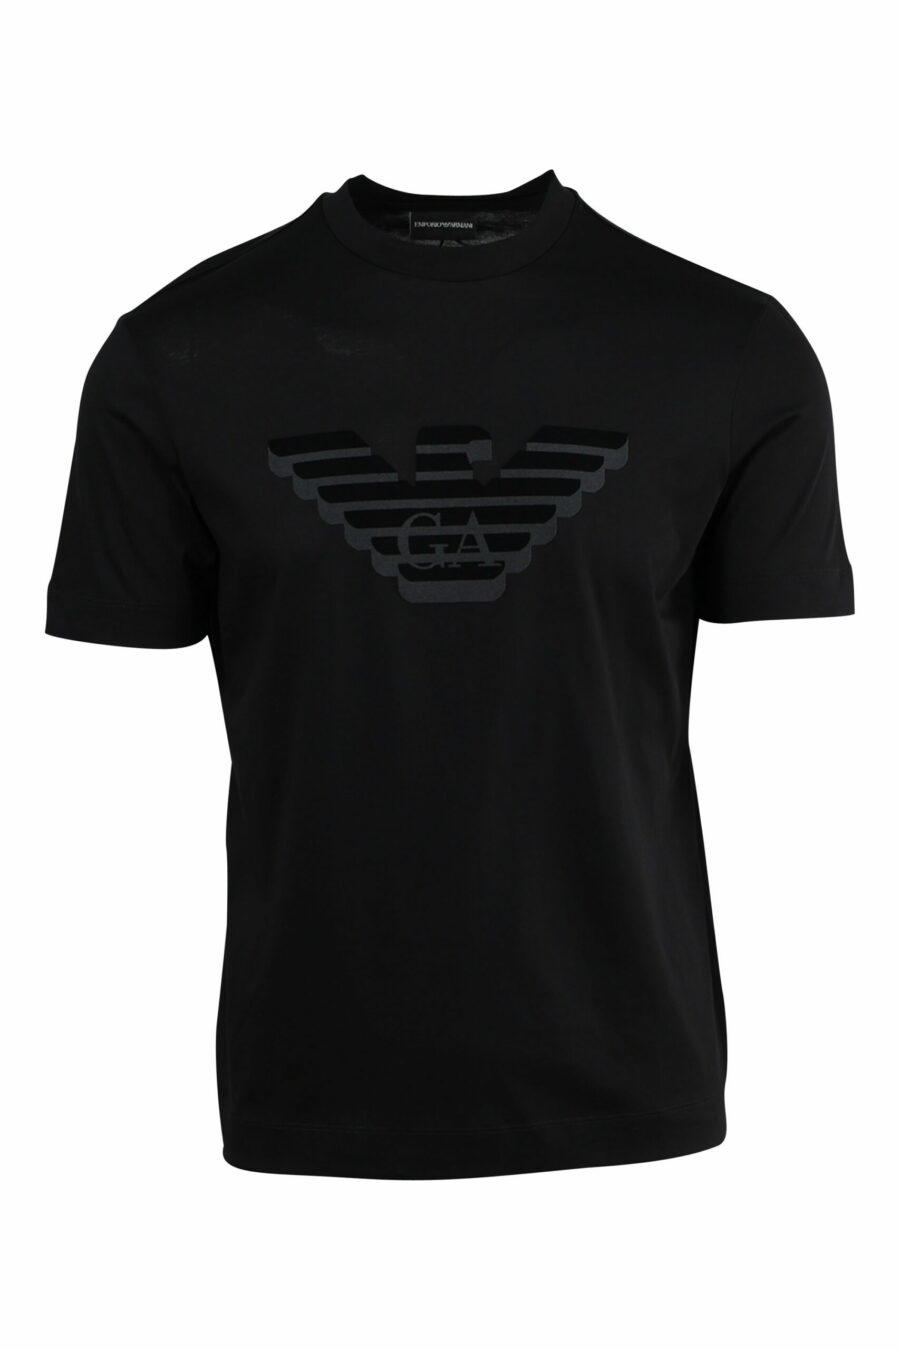 T-shirt noir avec maxilogo aigle embossé - 8057970433729 scaled